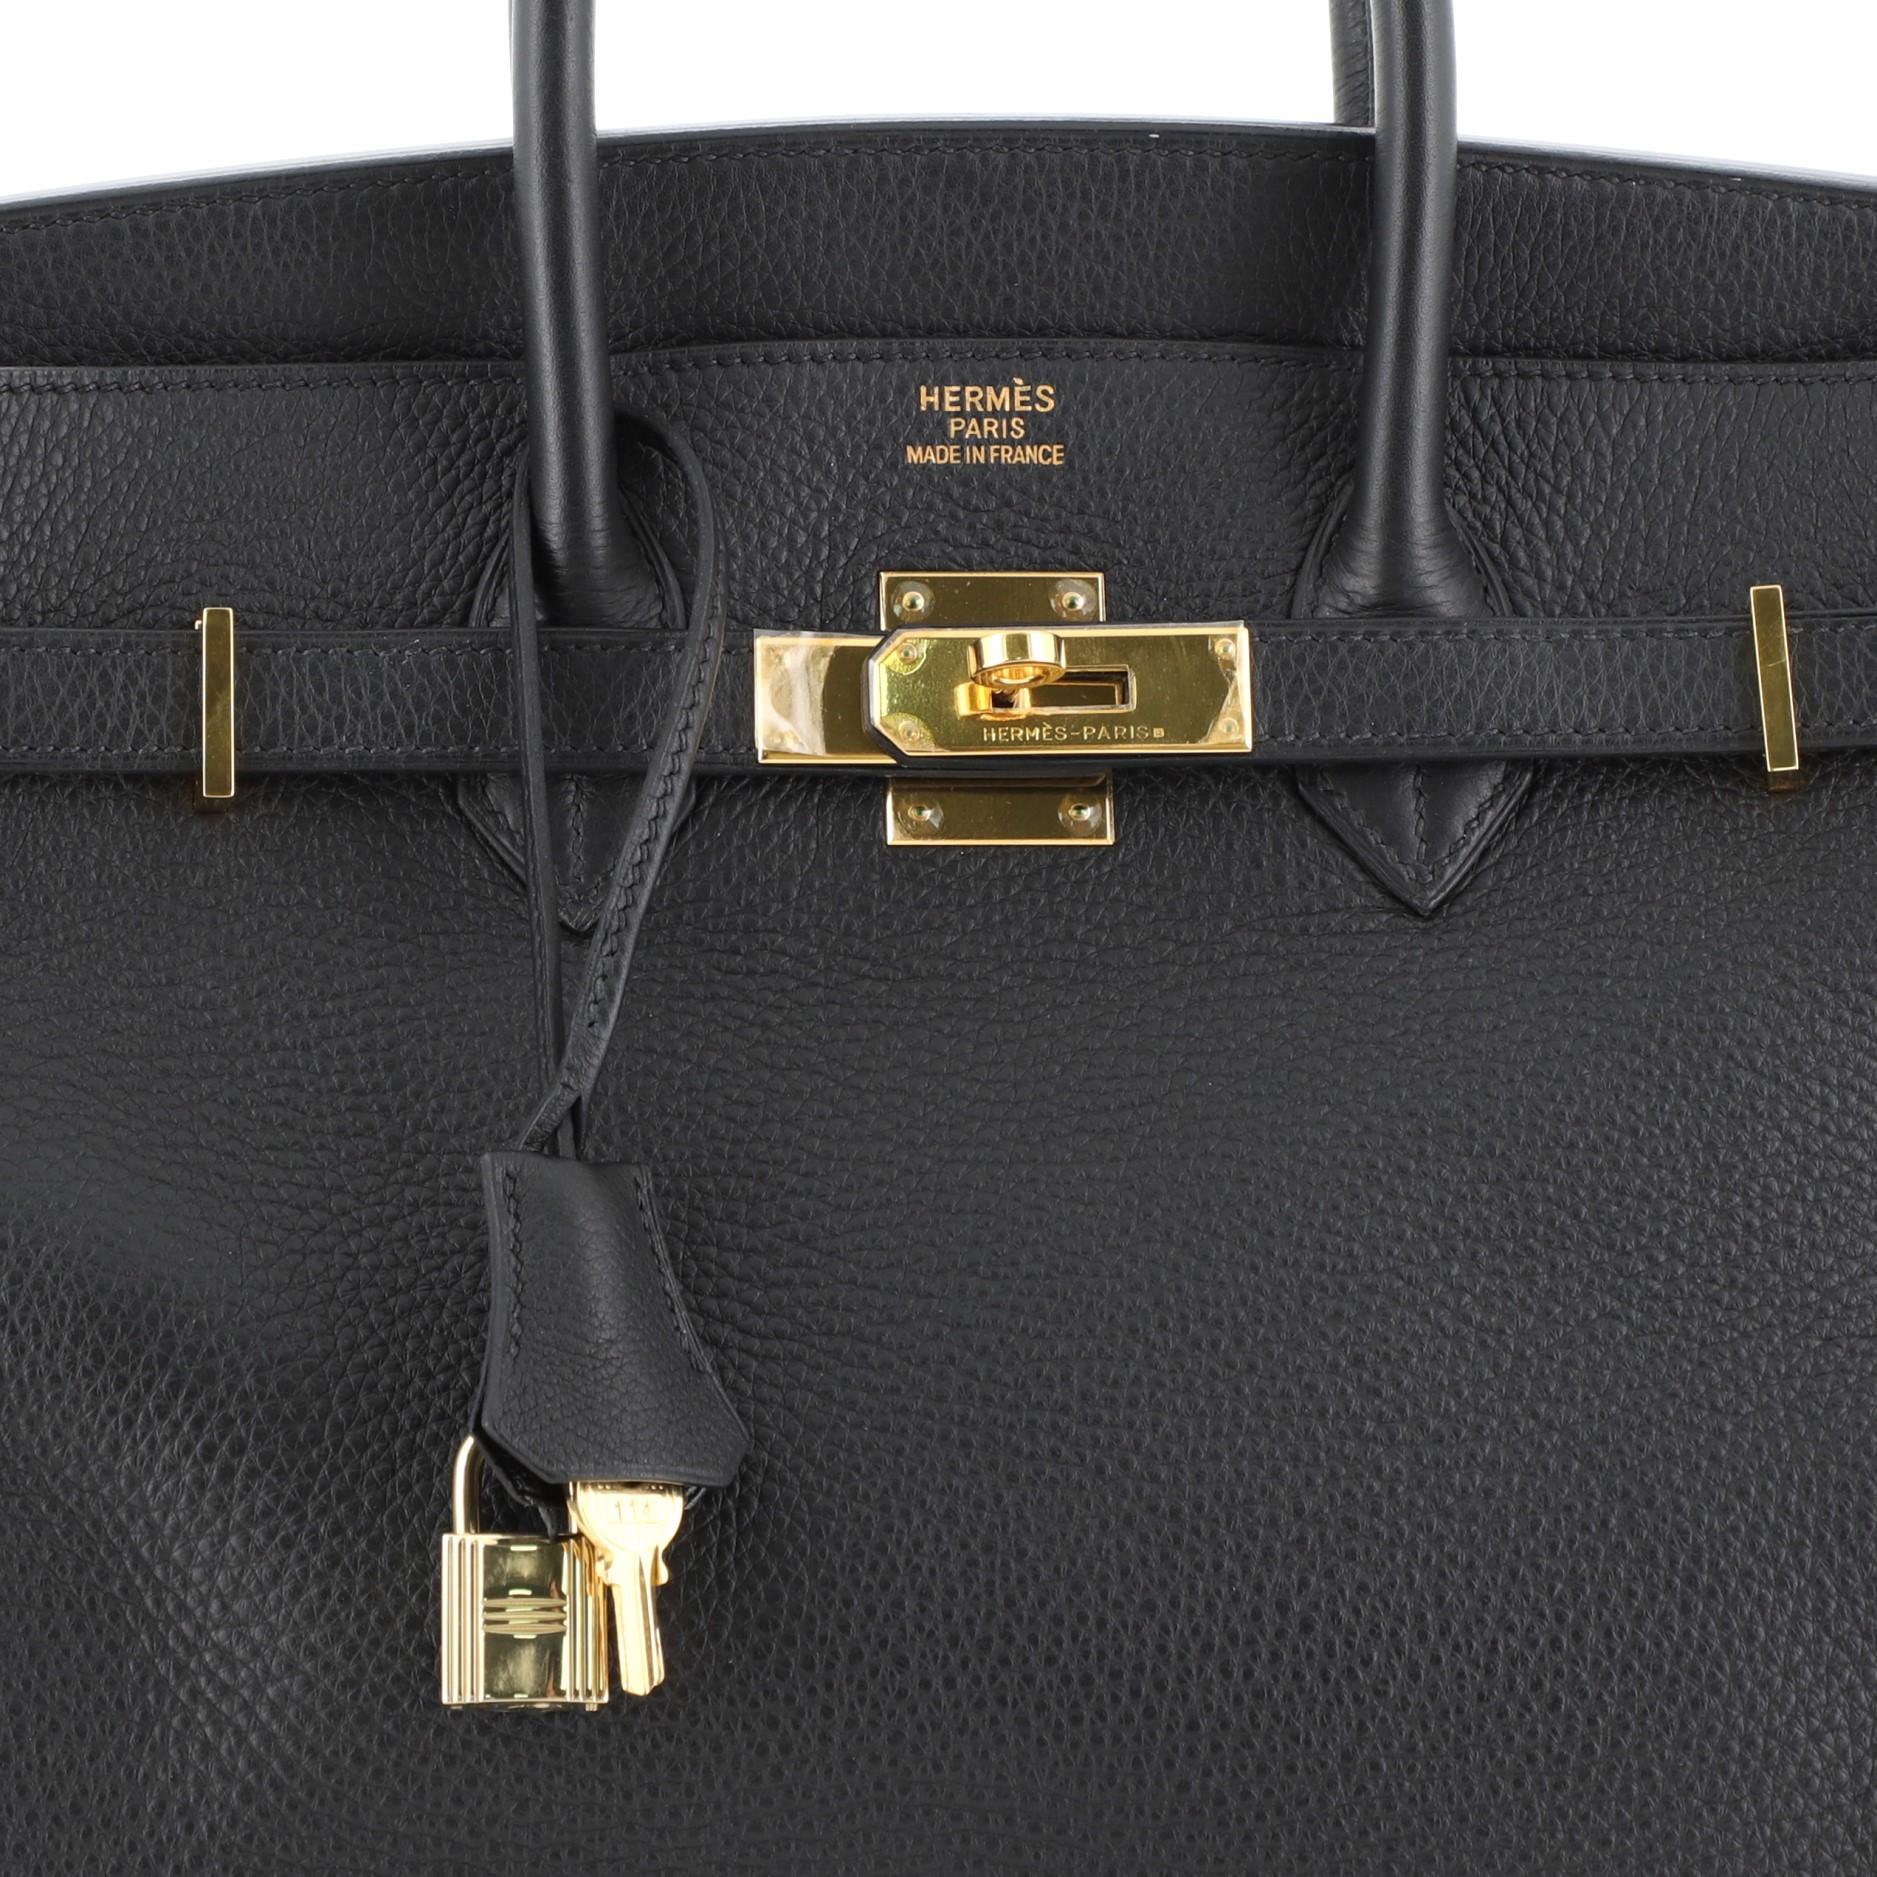 Hermes Birkin Handbag 1